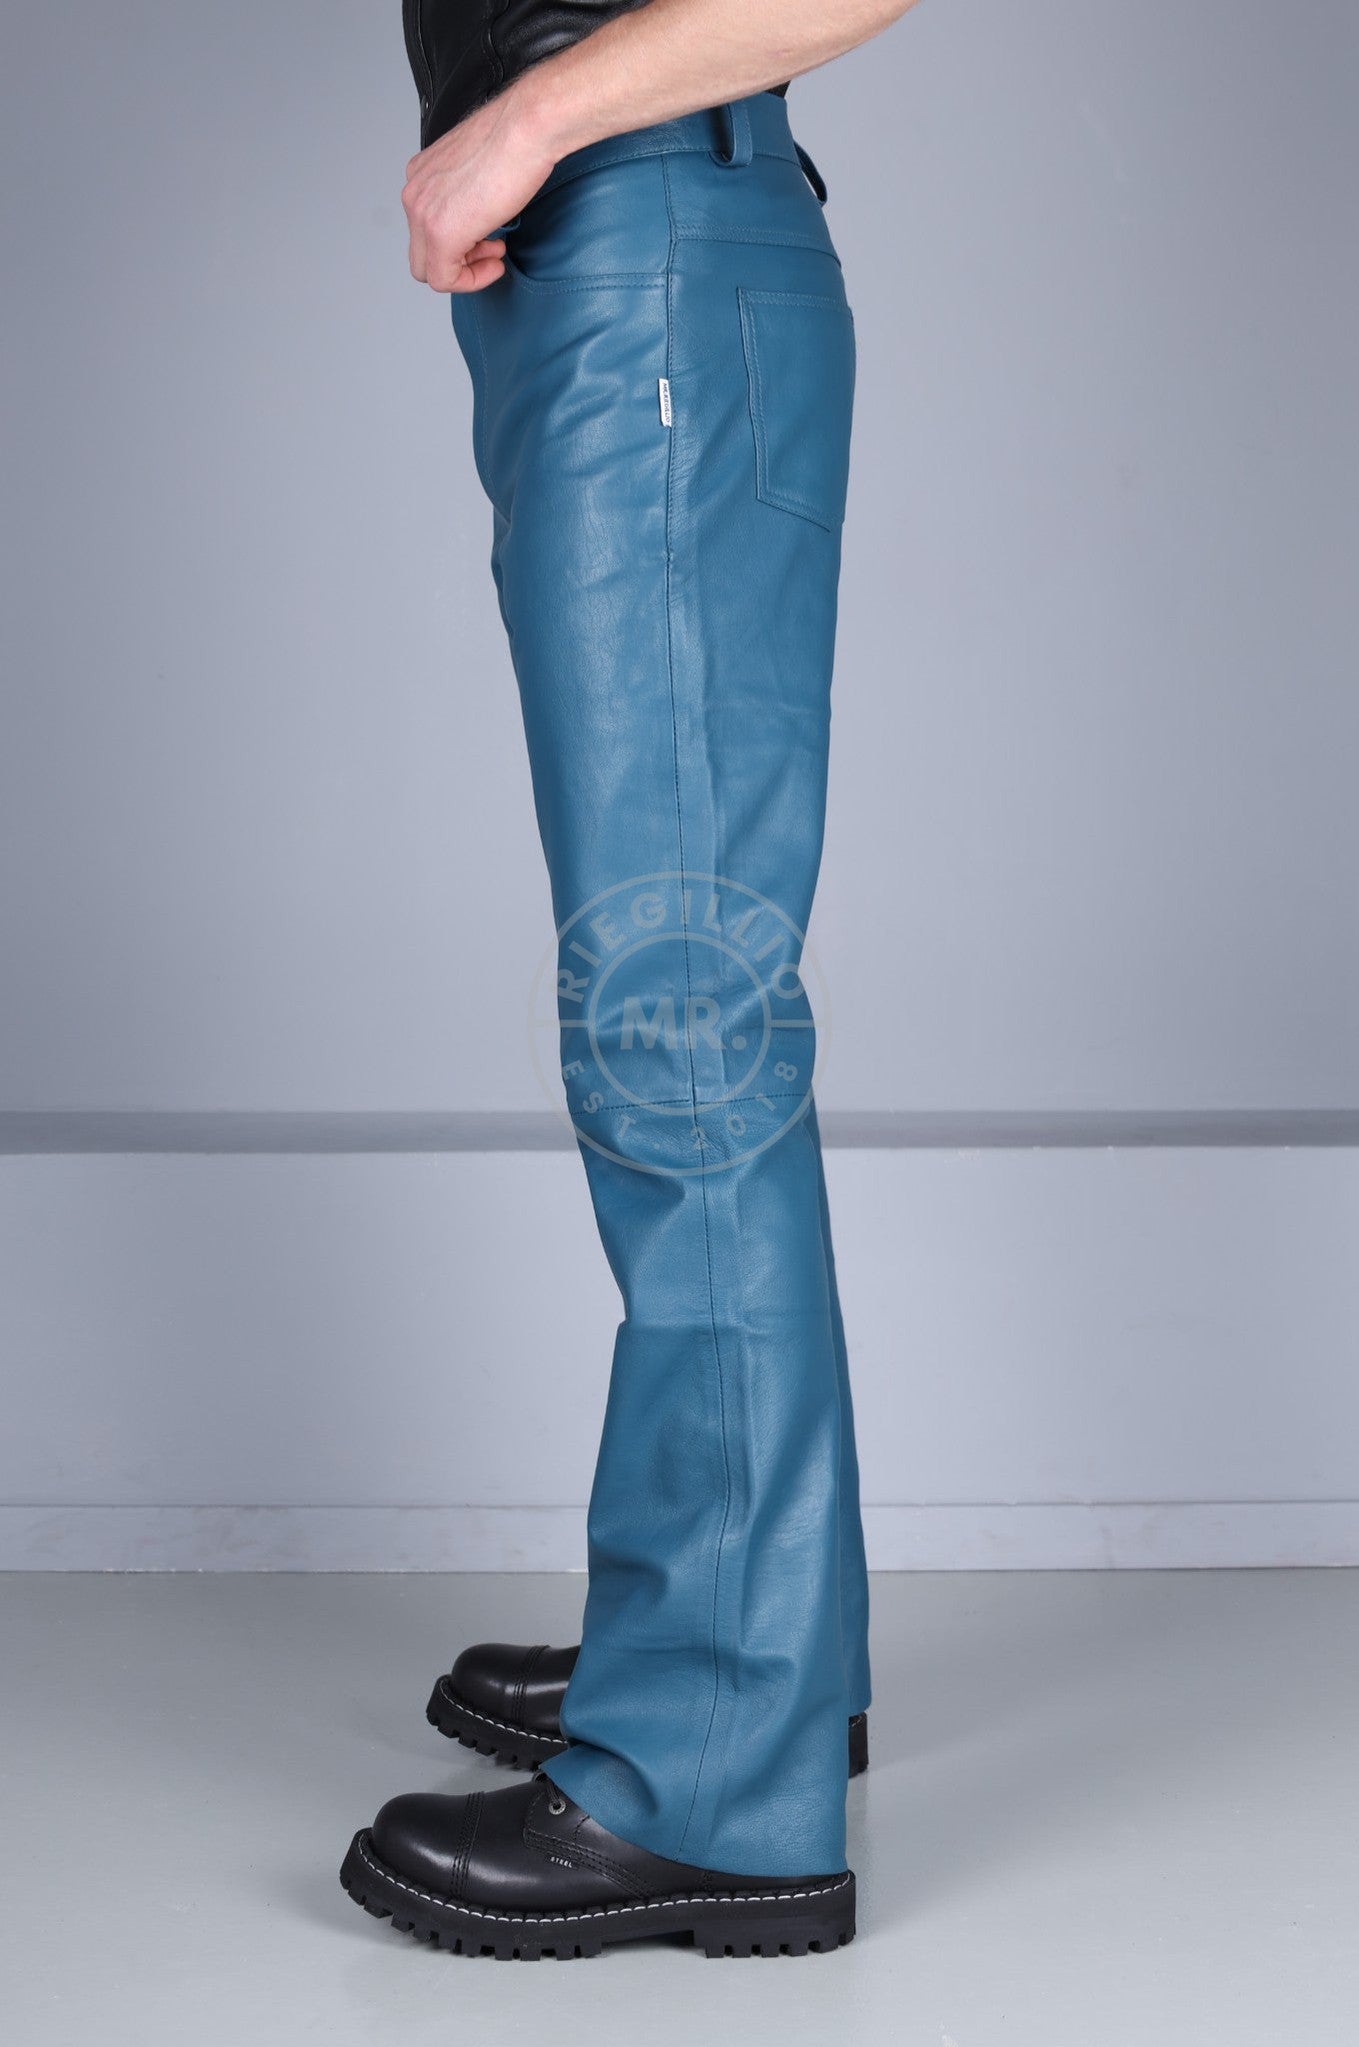 Jeans Blue Leather Bootcut Pants at MR. Riegillio